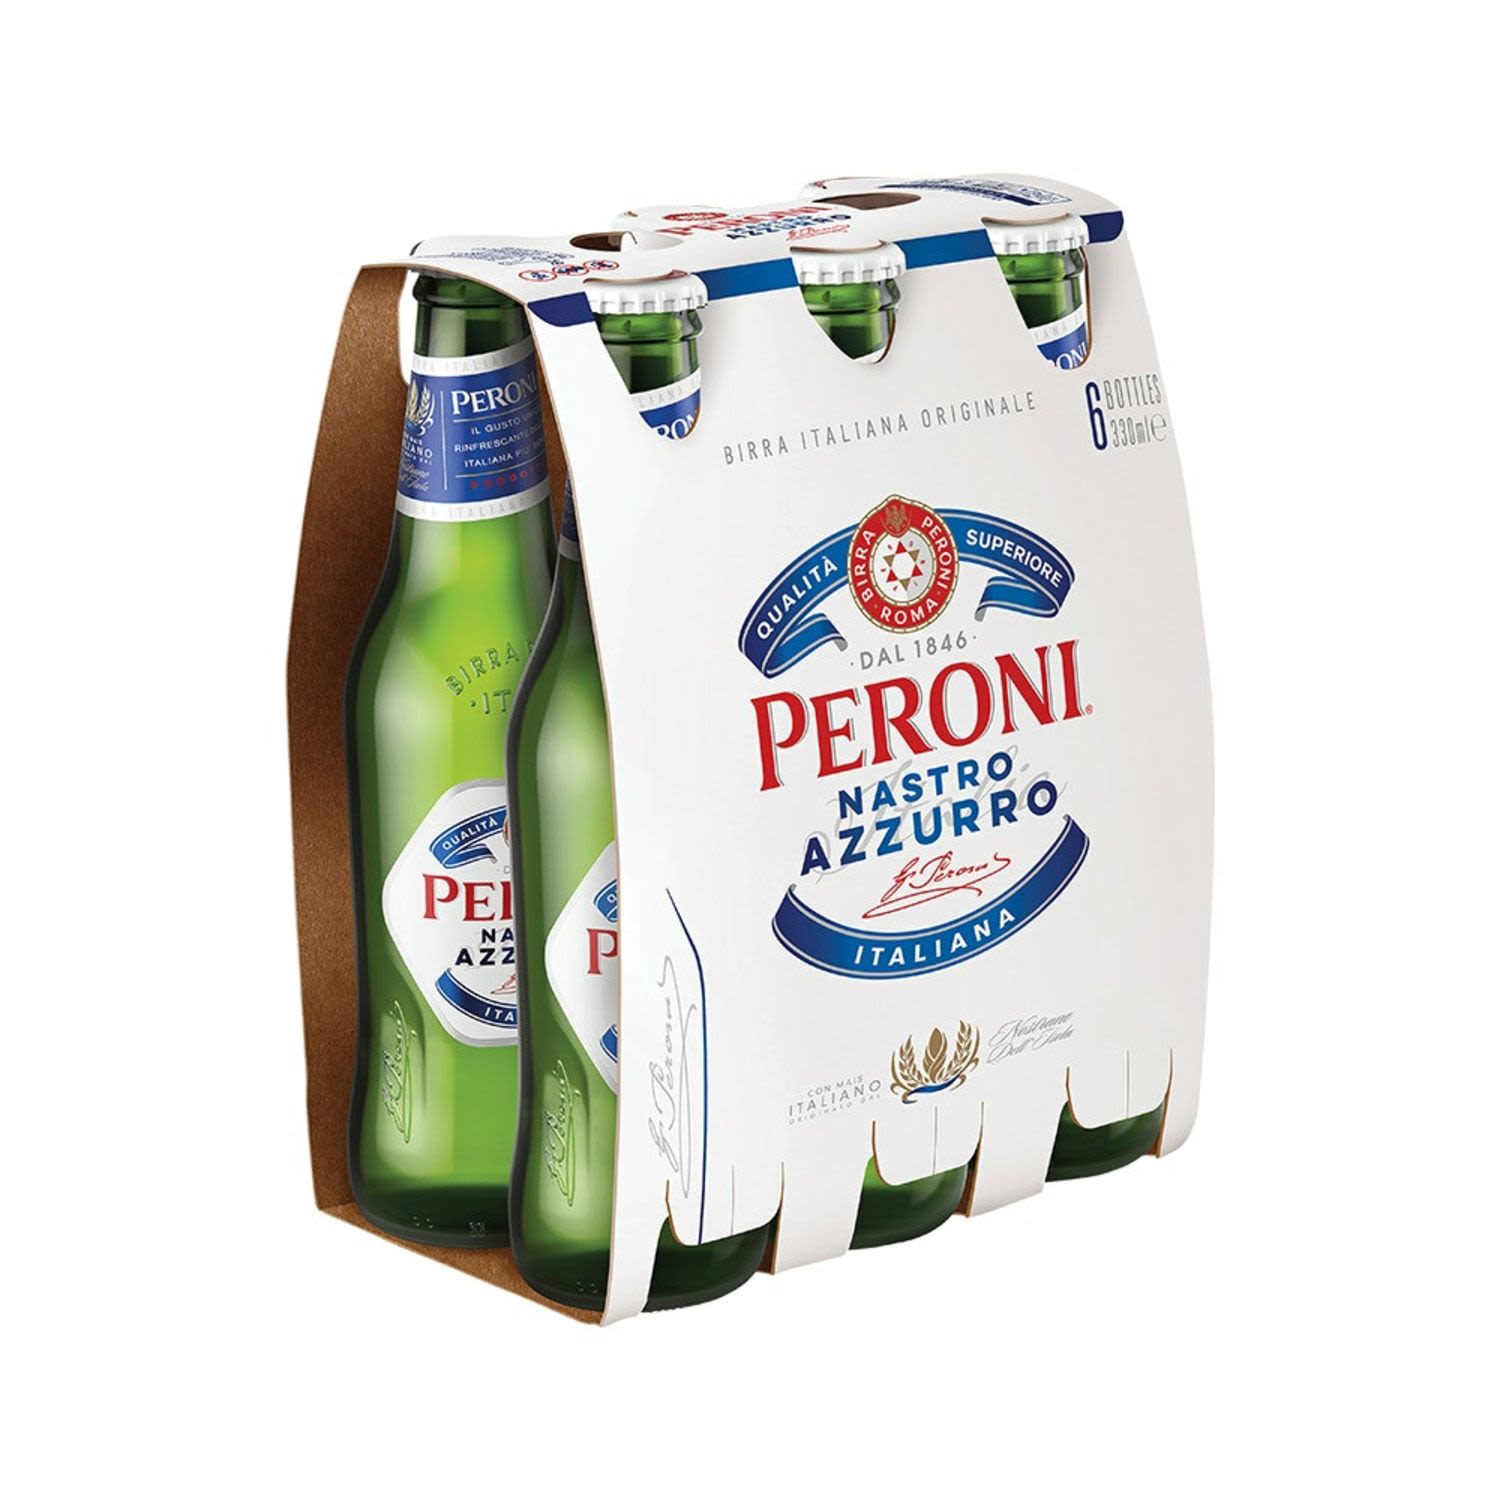 Peroni Nastro Azzurro Bottle 330mL 6 Pack